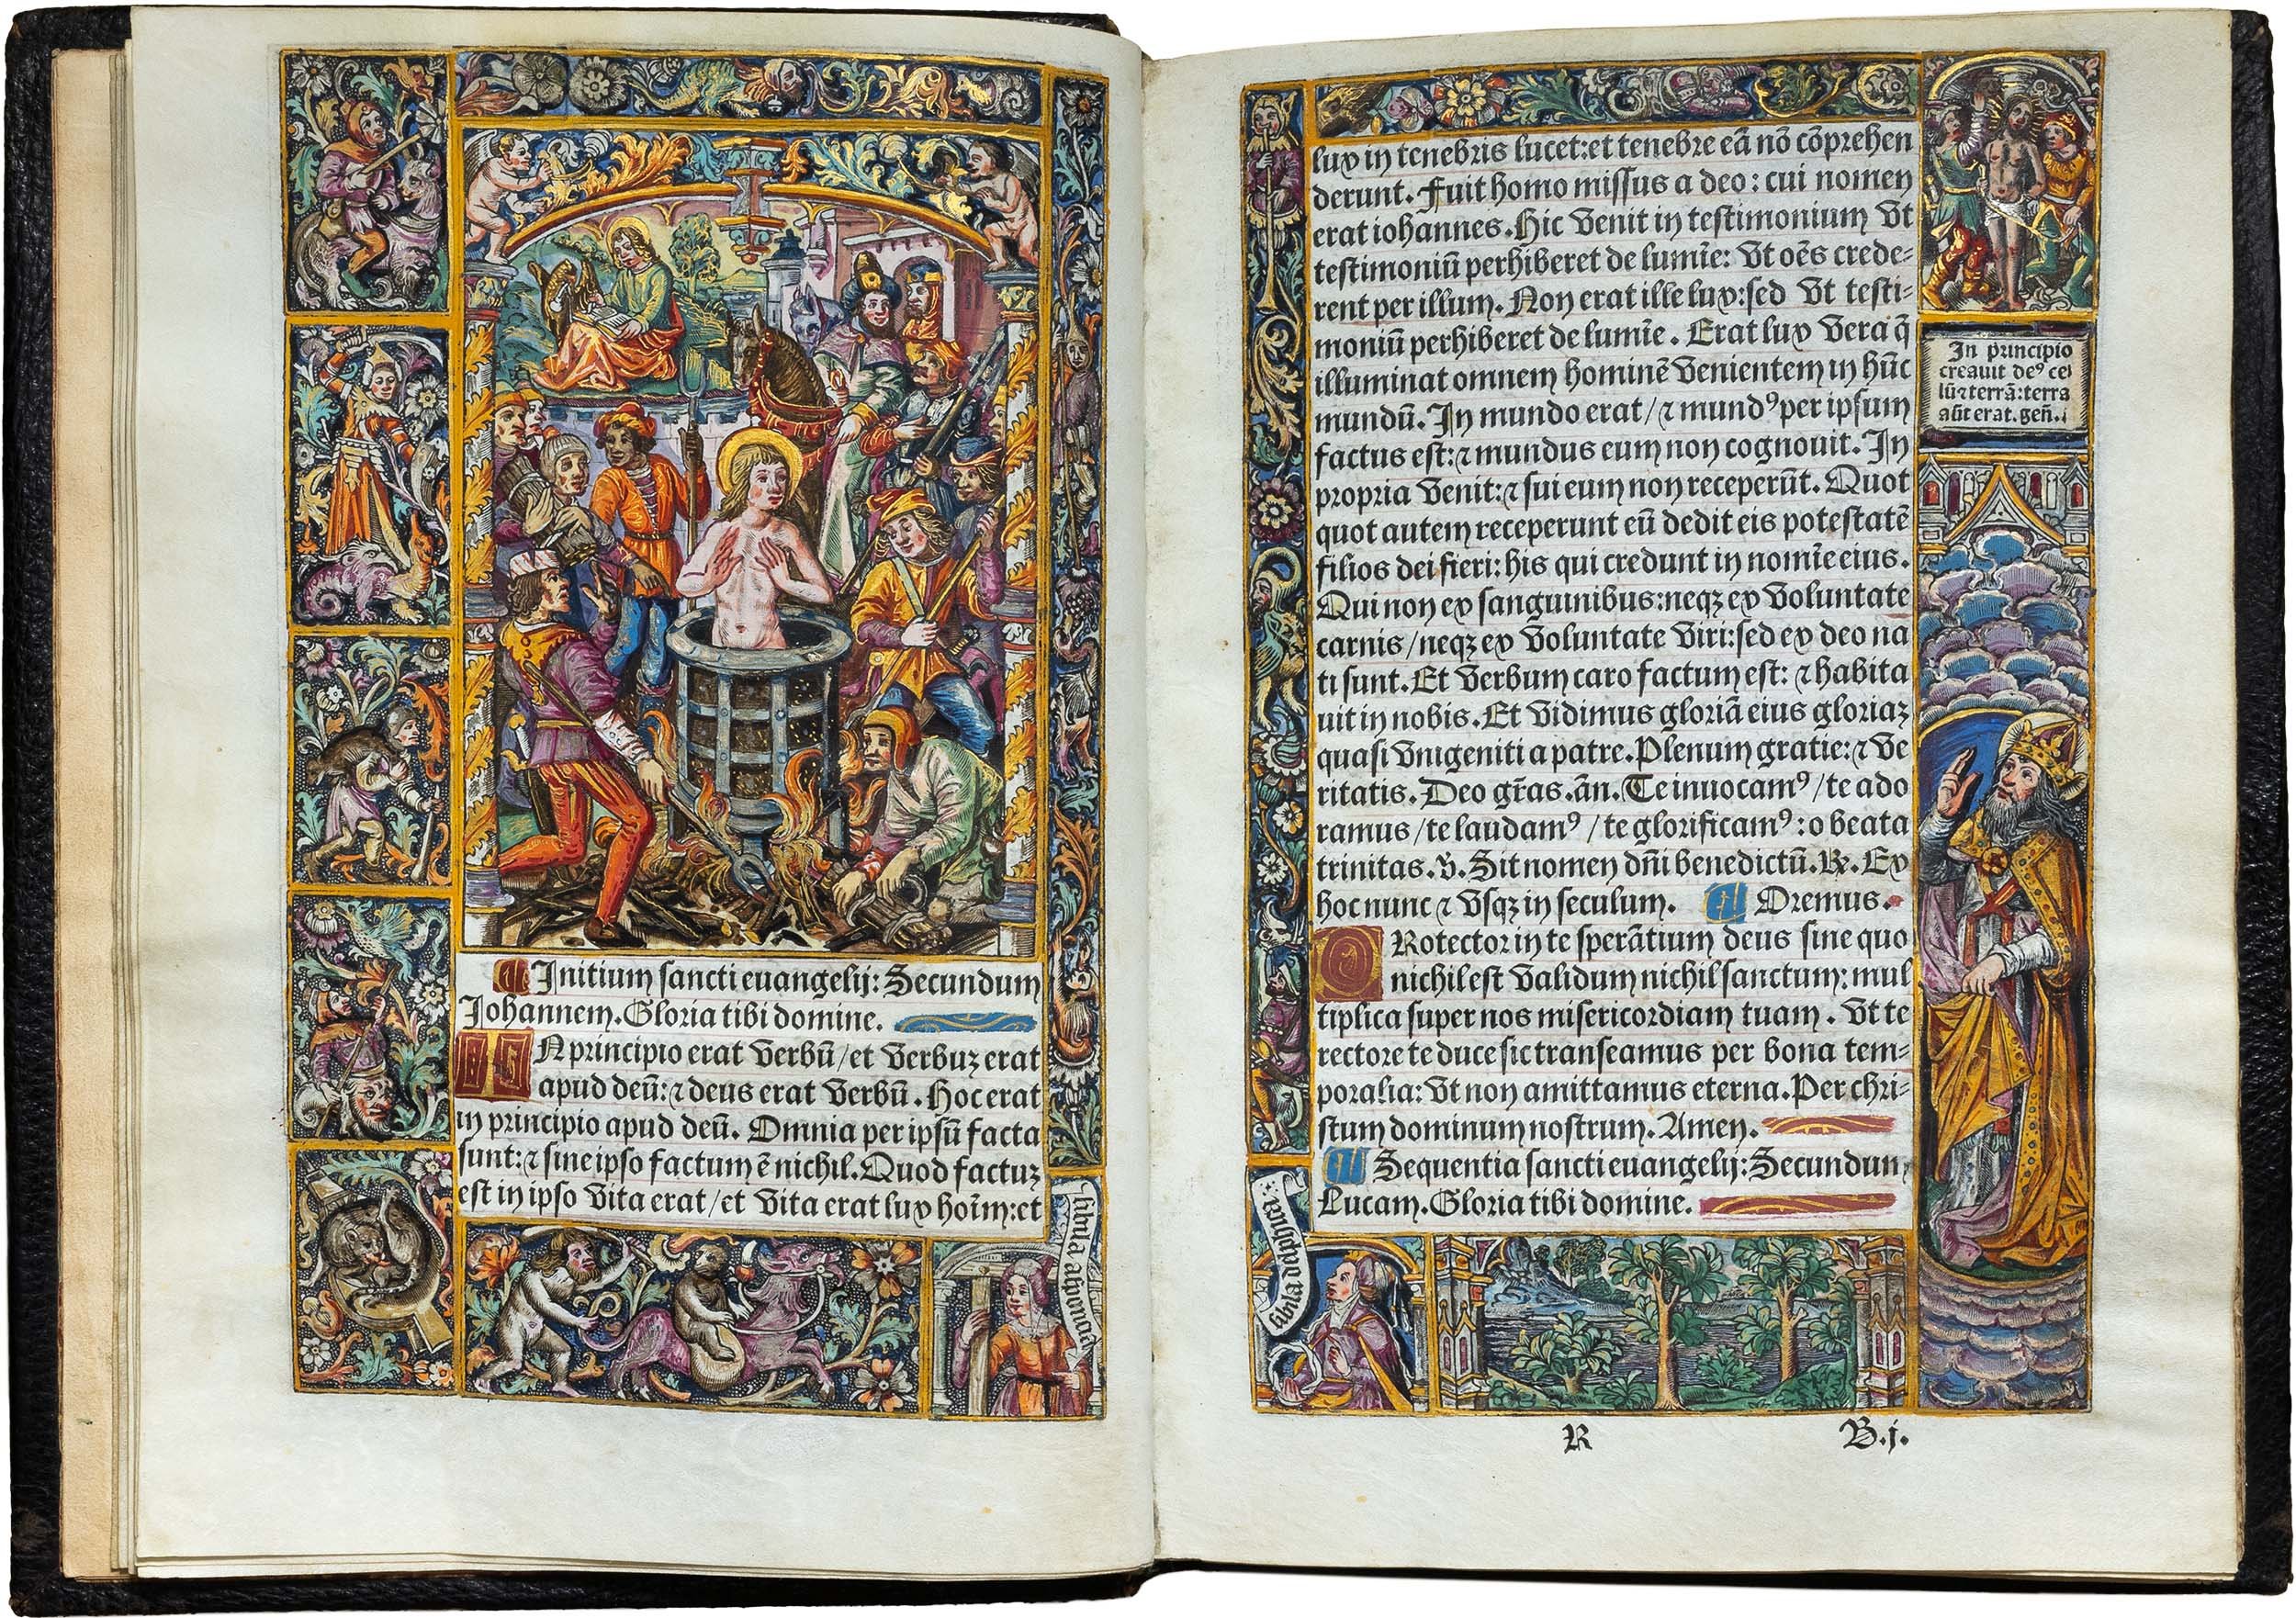 Printed-Book-of-Hours-10-january-1503-horae-bmv-kerver-remacle-illuminated-vellum-copy-schönborn-buchheim-12.jpg